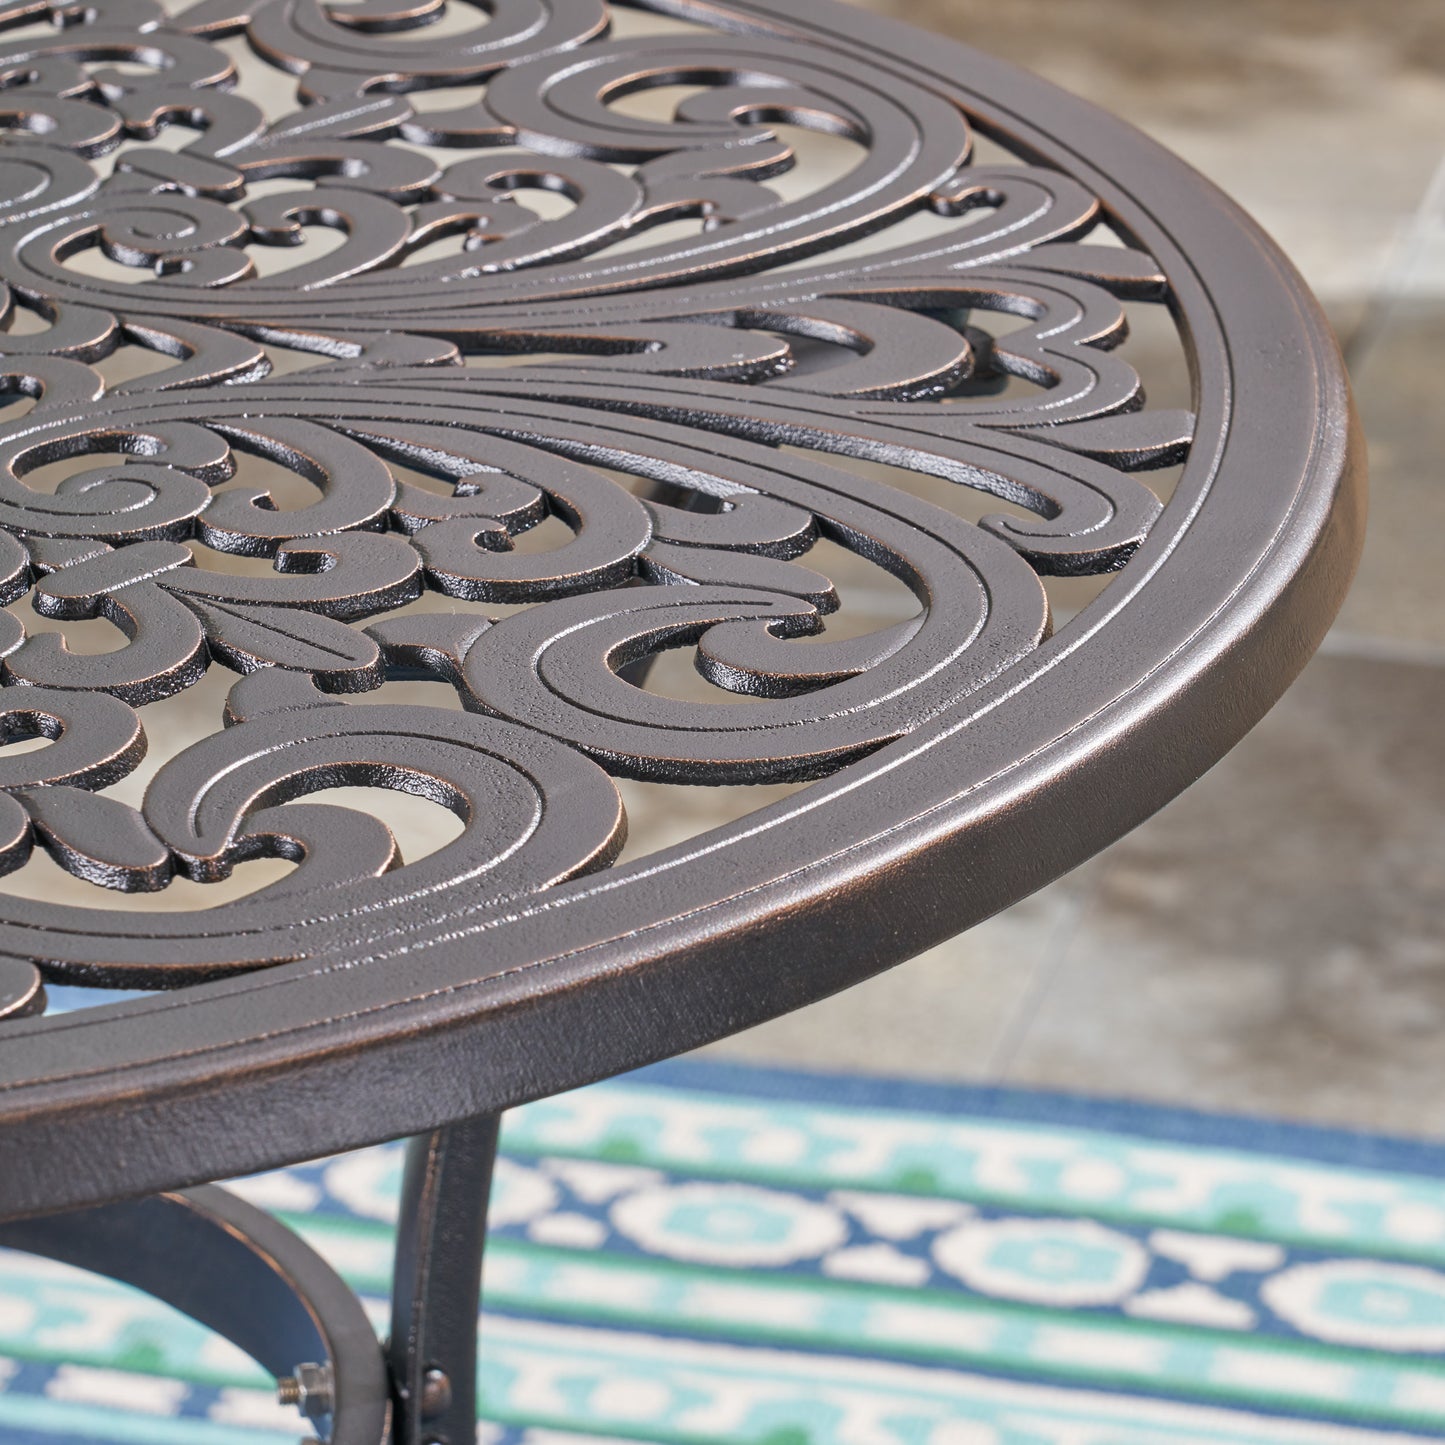 Buda Outdoor Cast Aluminum Dining Table, Shiny Copper